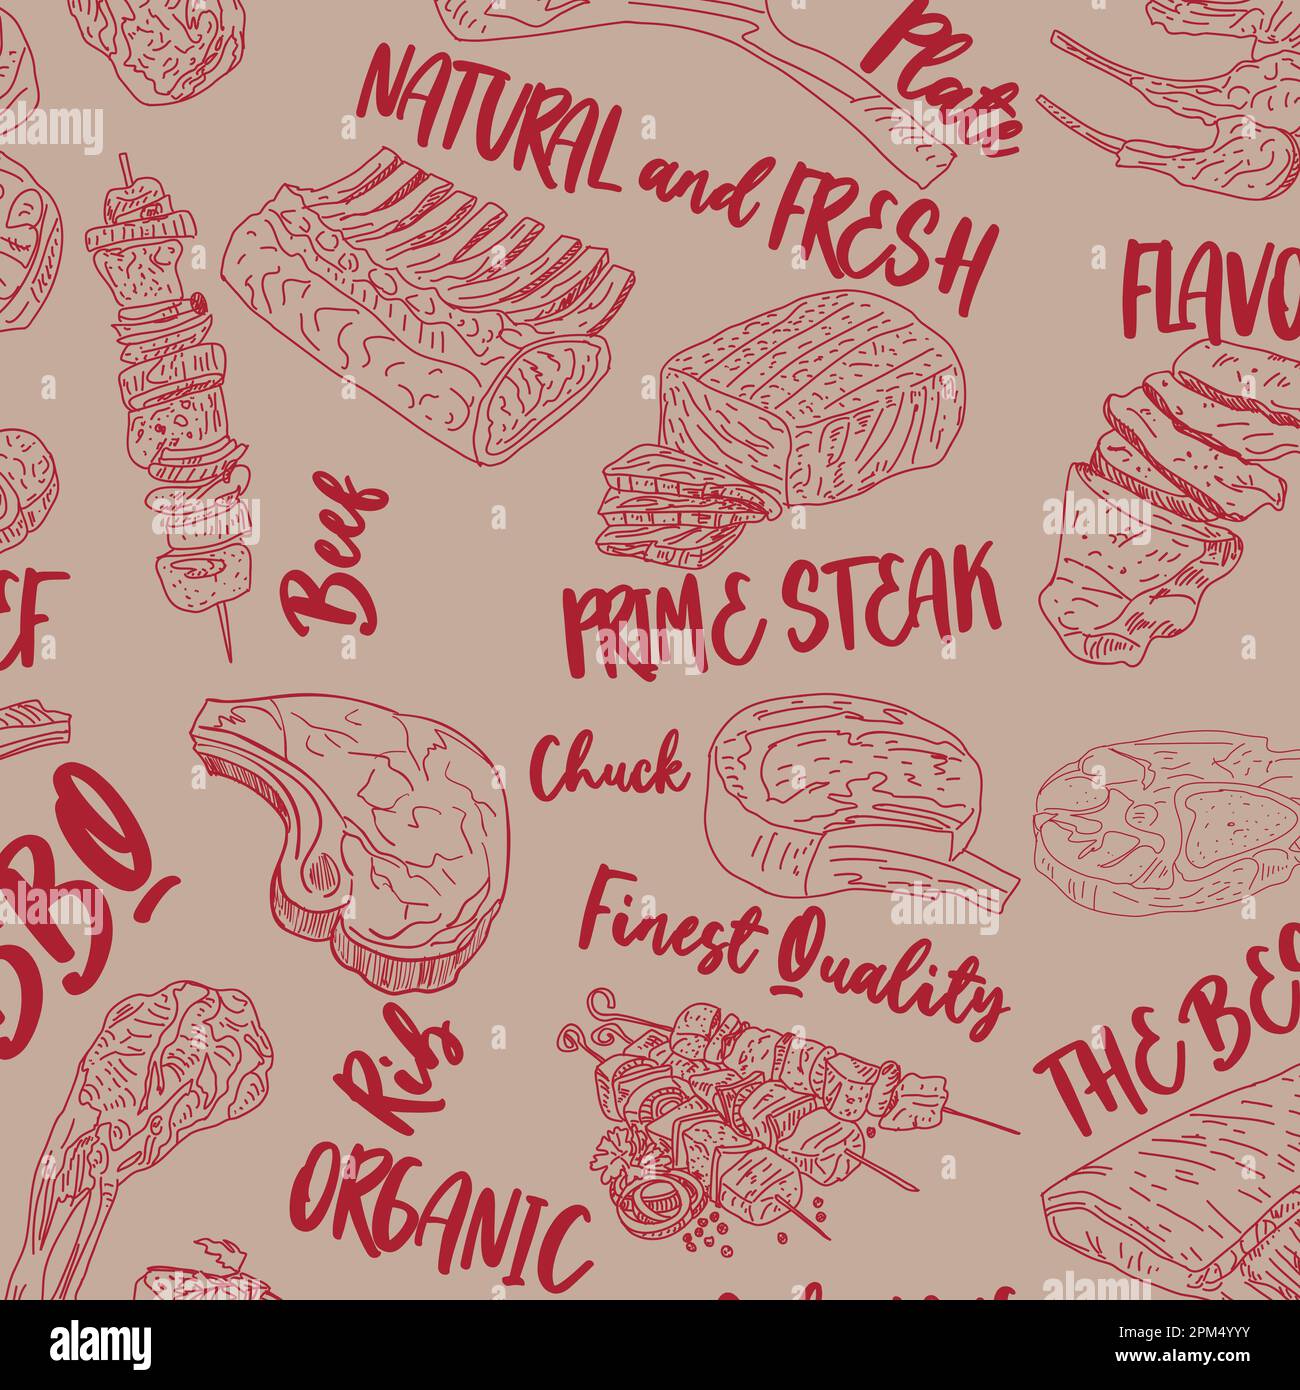 https://c8.alamy.com/comp/2PM4YYY/meat-seamless-pattern-hand-drawn-vector-illustration-carved-style-food-menu-background-sketch-illustration-2PM4YYY.jpg